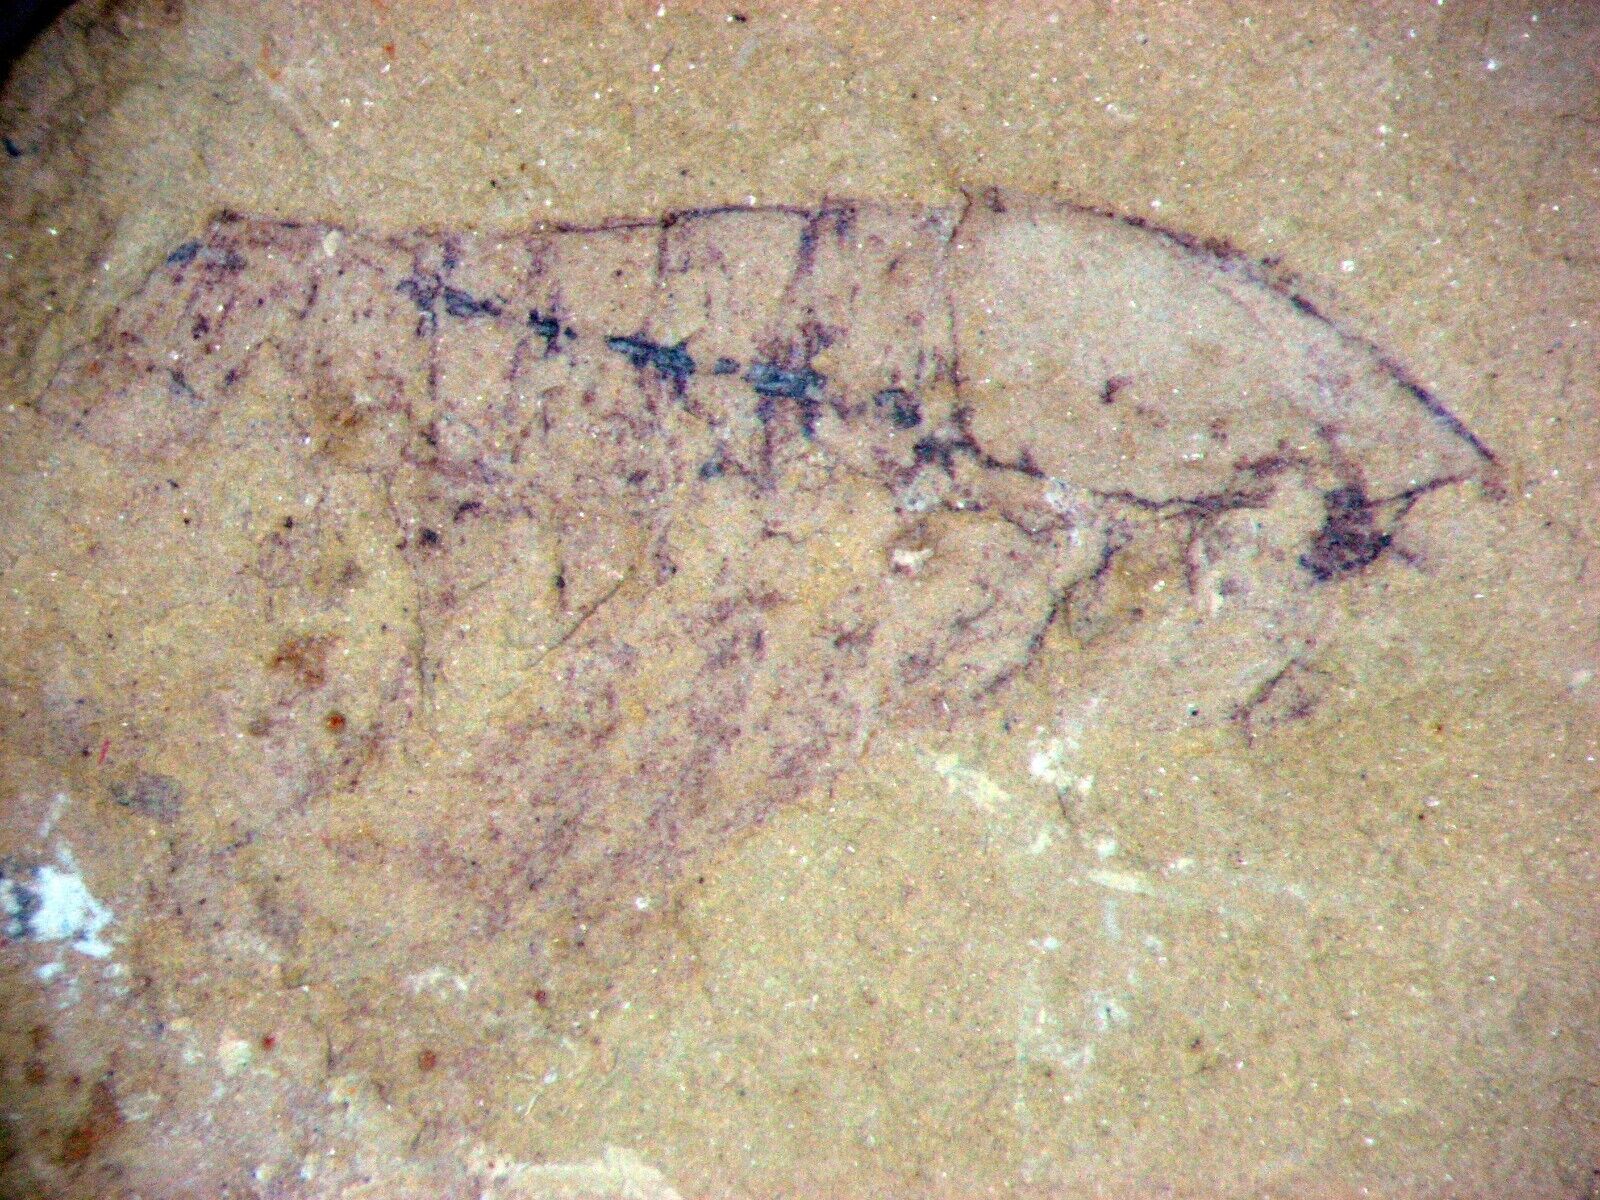 Cambrian Chengjiang fauna fossil LEANCHOILIA rare arthropod great details